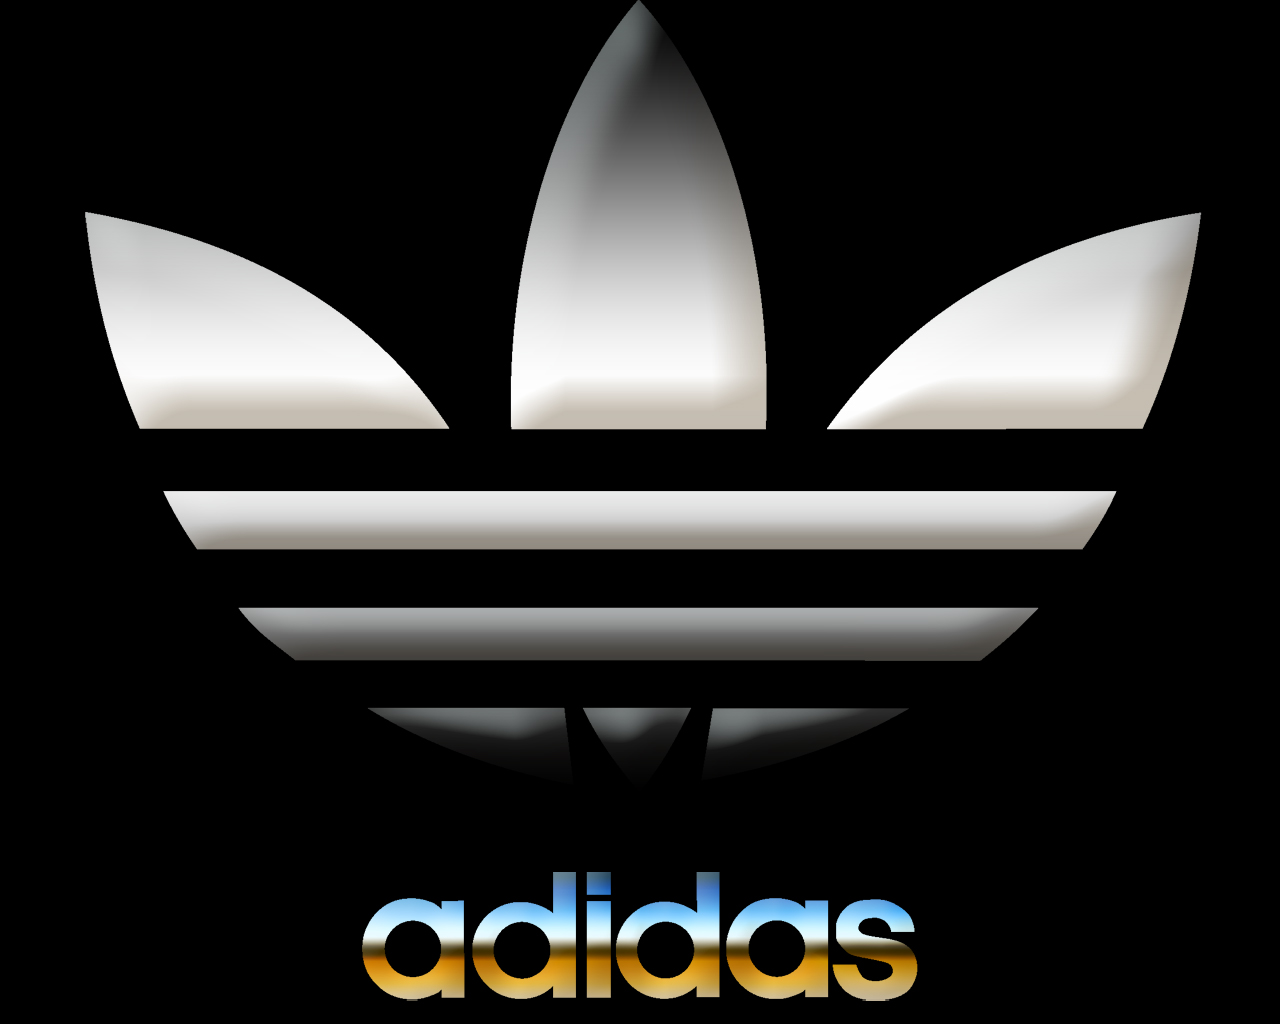 Adidas Logo Wallpaper 6297 Hd Wallpapers in Logos   Imagescicom 1280x1024